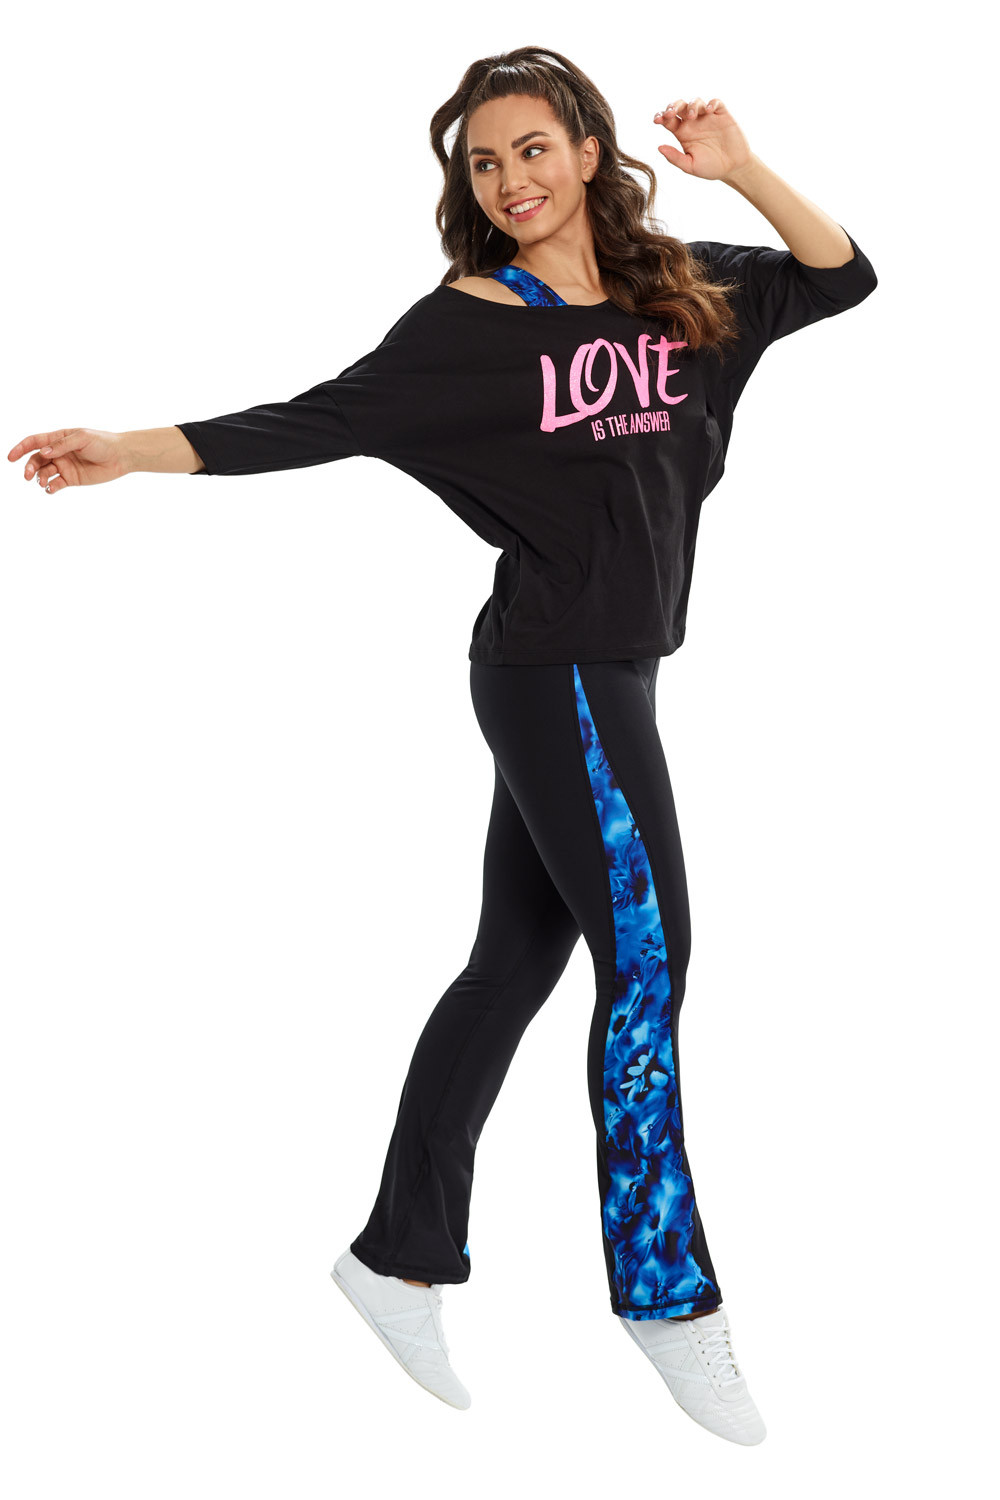 Style Ultra Dance the leichtes is answer”, pinkem Winshape „Love MCS001 Modal-3/4-Arm Glitzer-Aufdruck neon mit Shirt